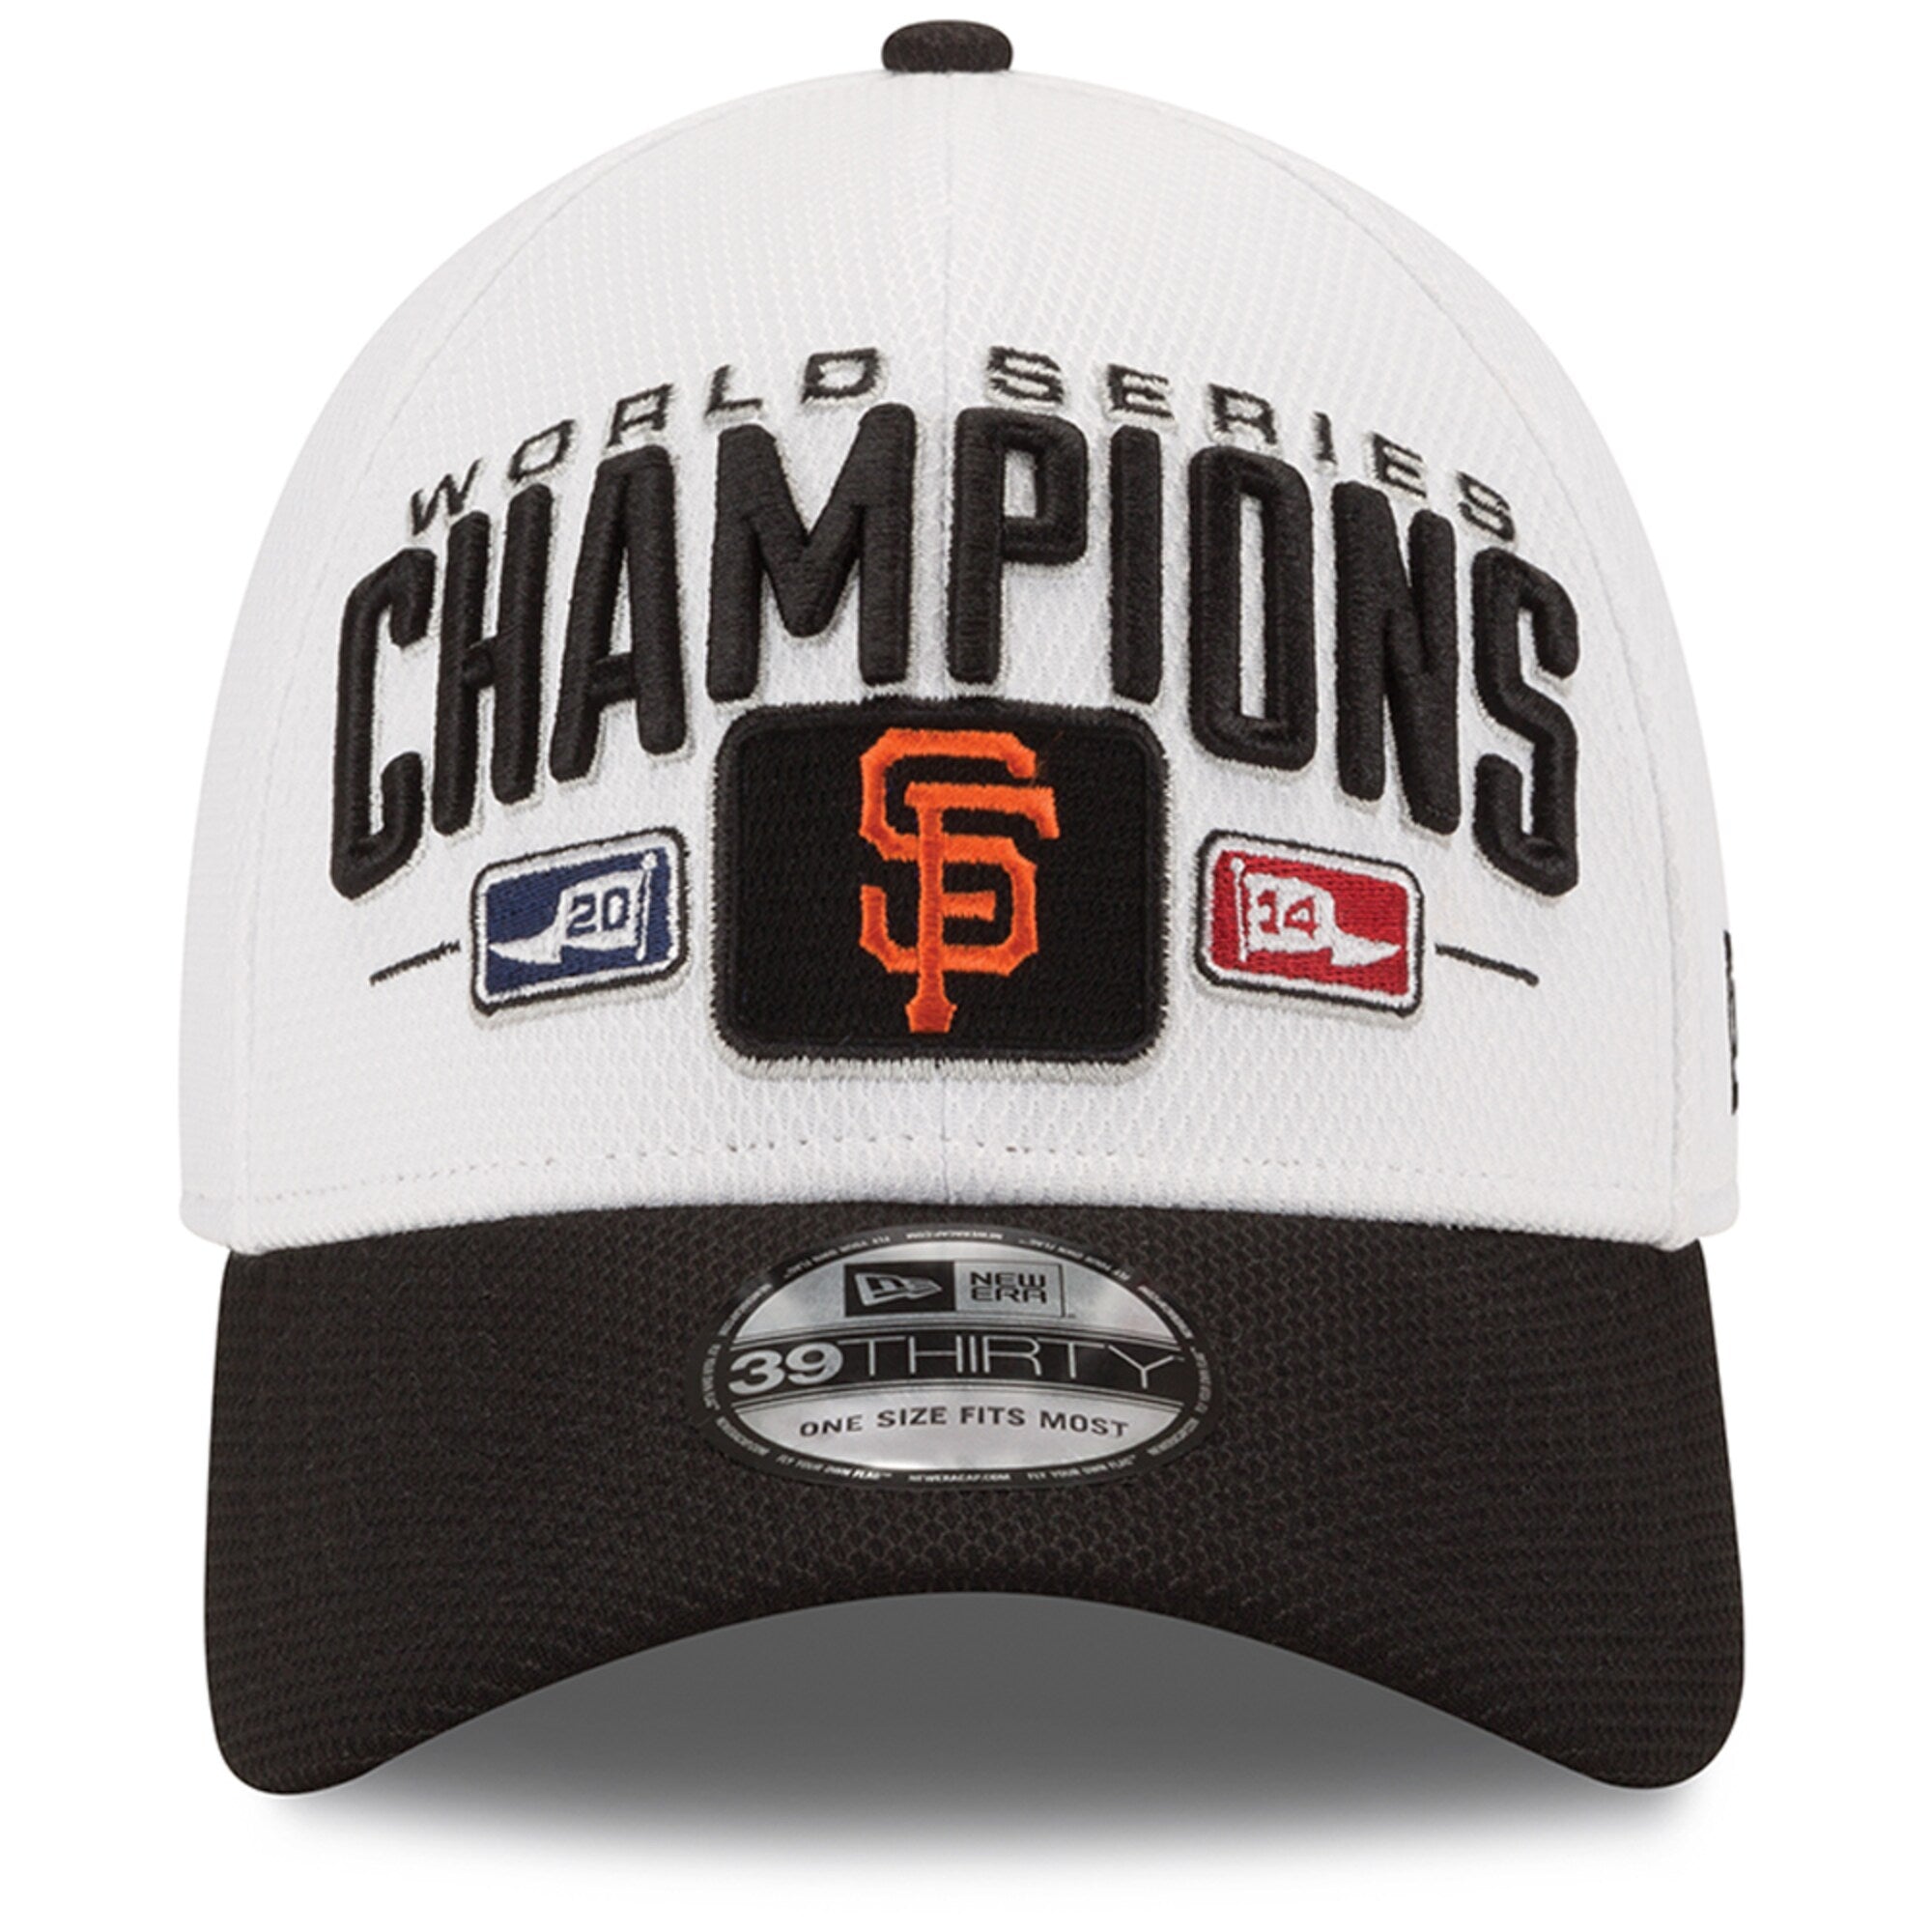 San Francisco Giants 2014 World Series Championship Baseball Cap